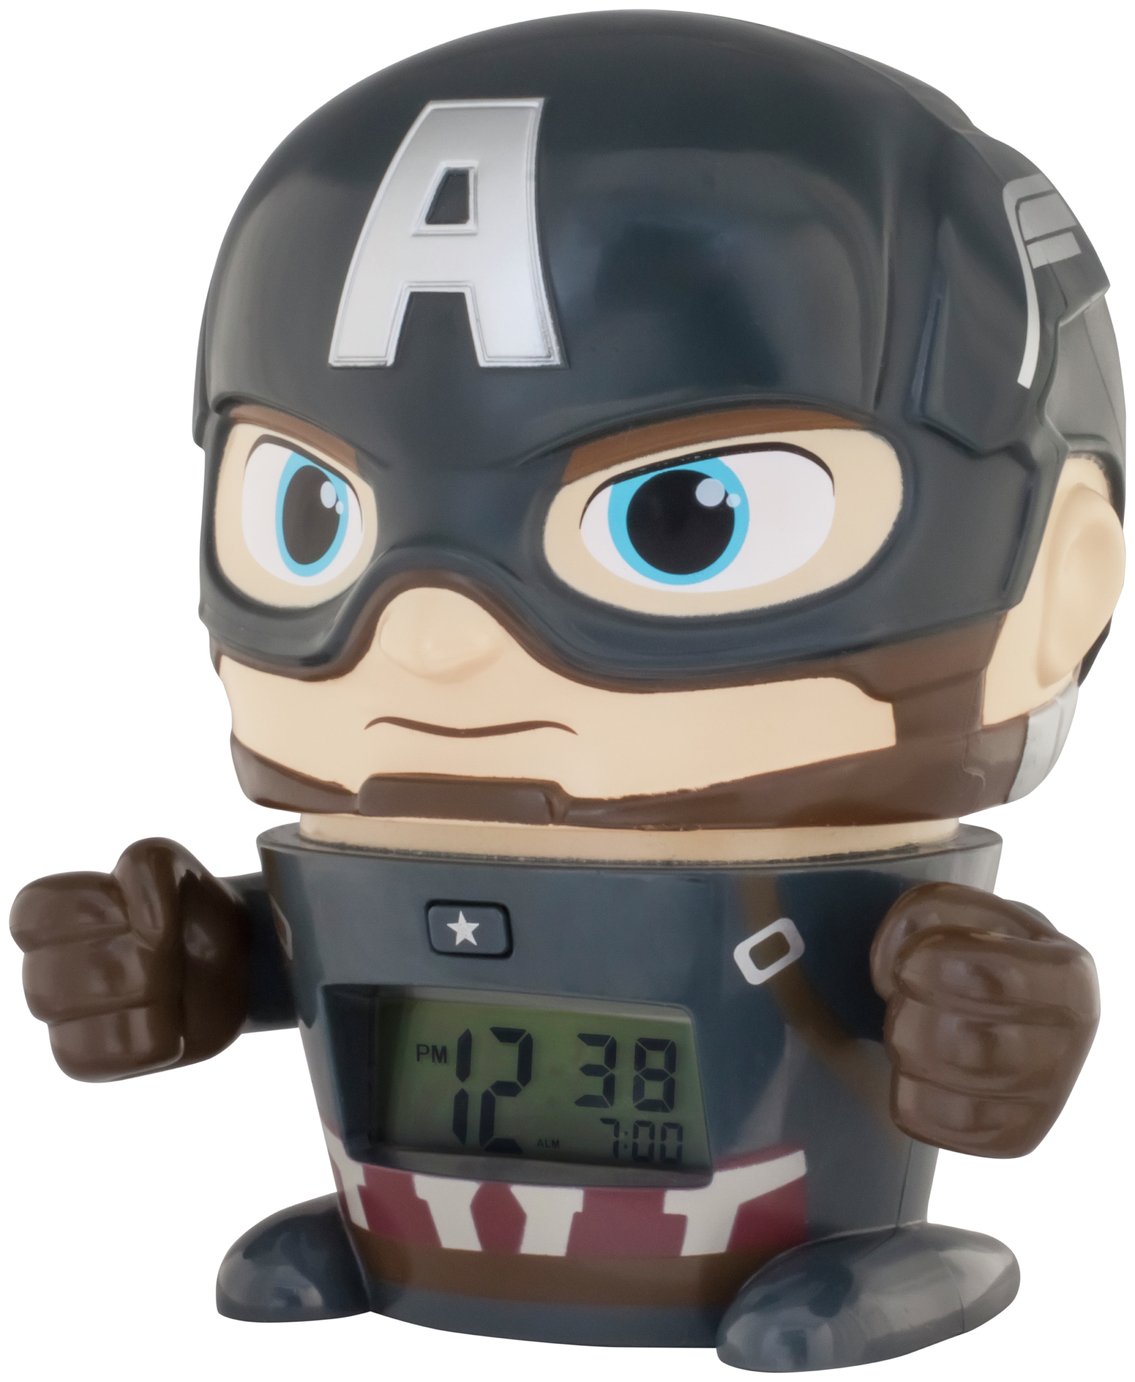 Bulbbotz Marvel Captain America Alarm Clock Review